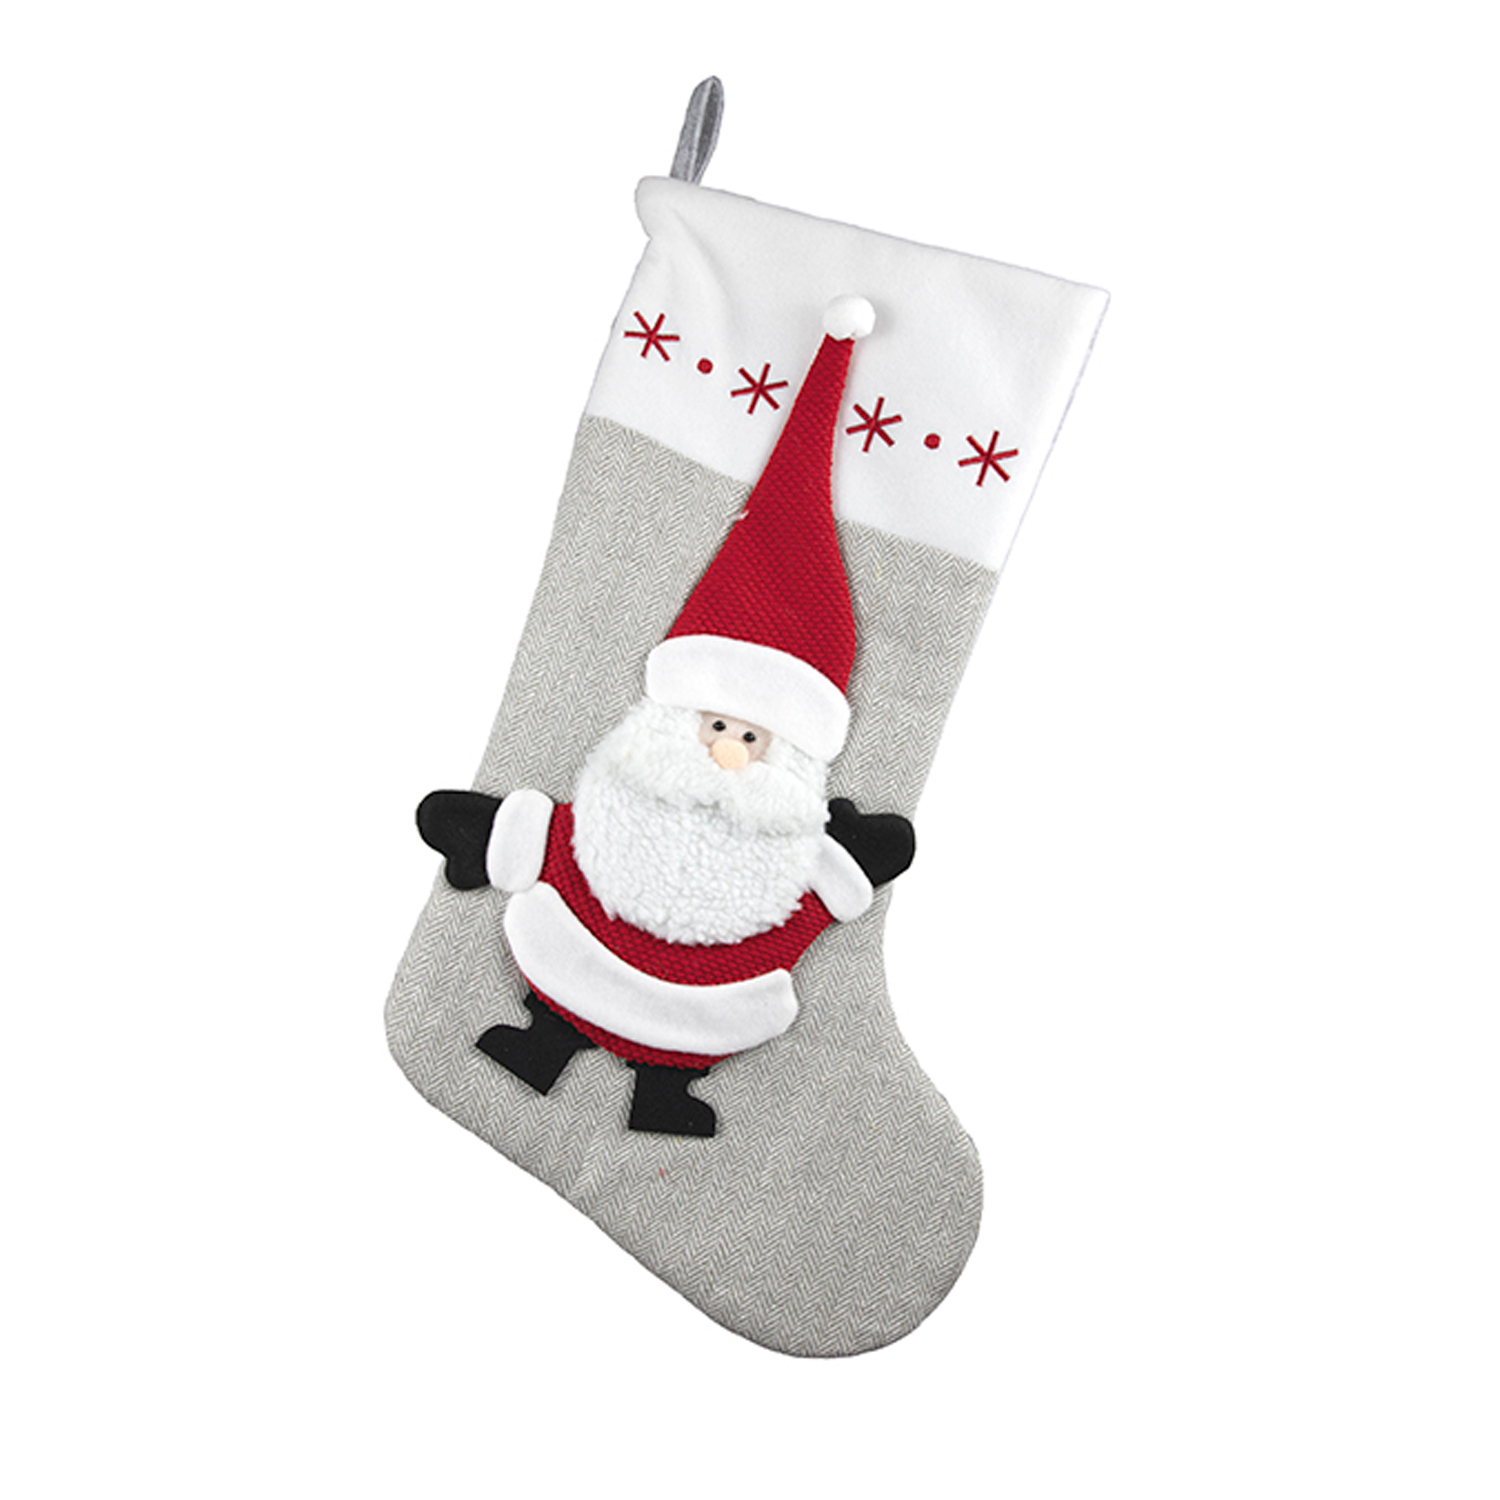 Danson - Christmas stockings, 55 cm, grey